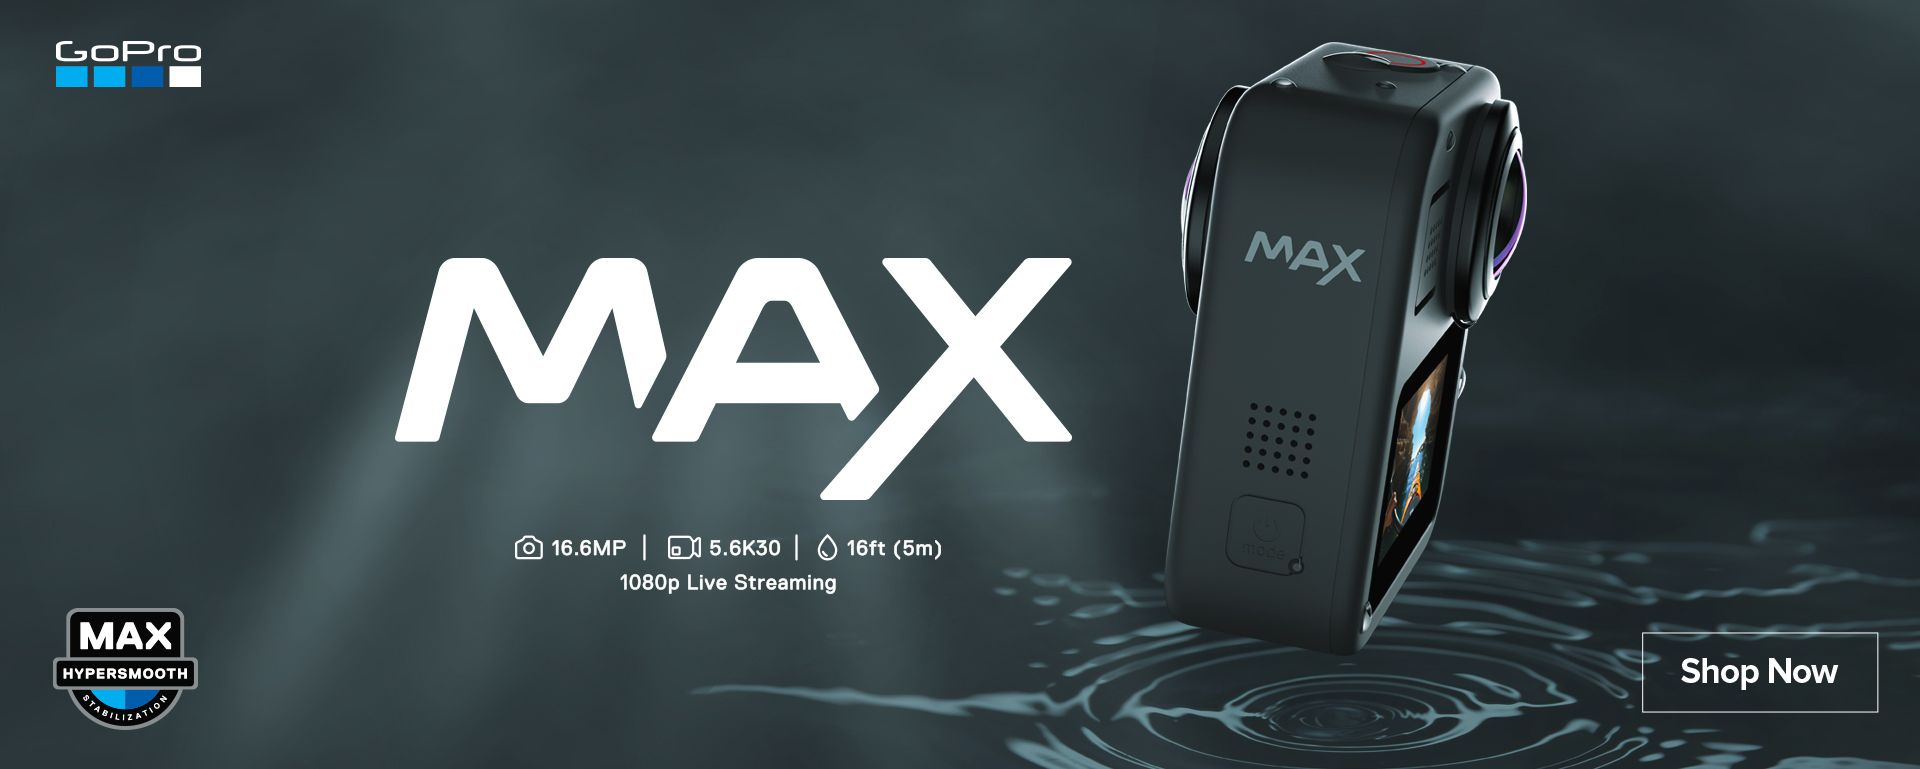 GoPro MAX | HyperSmooth